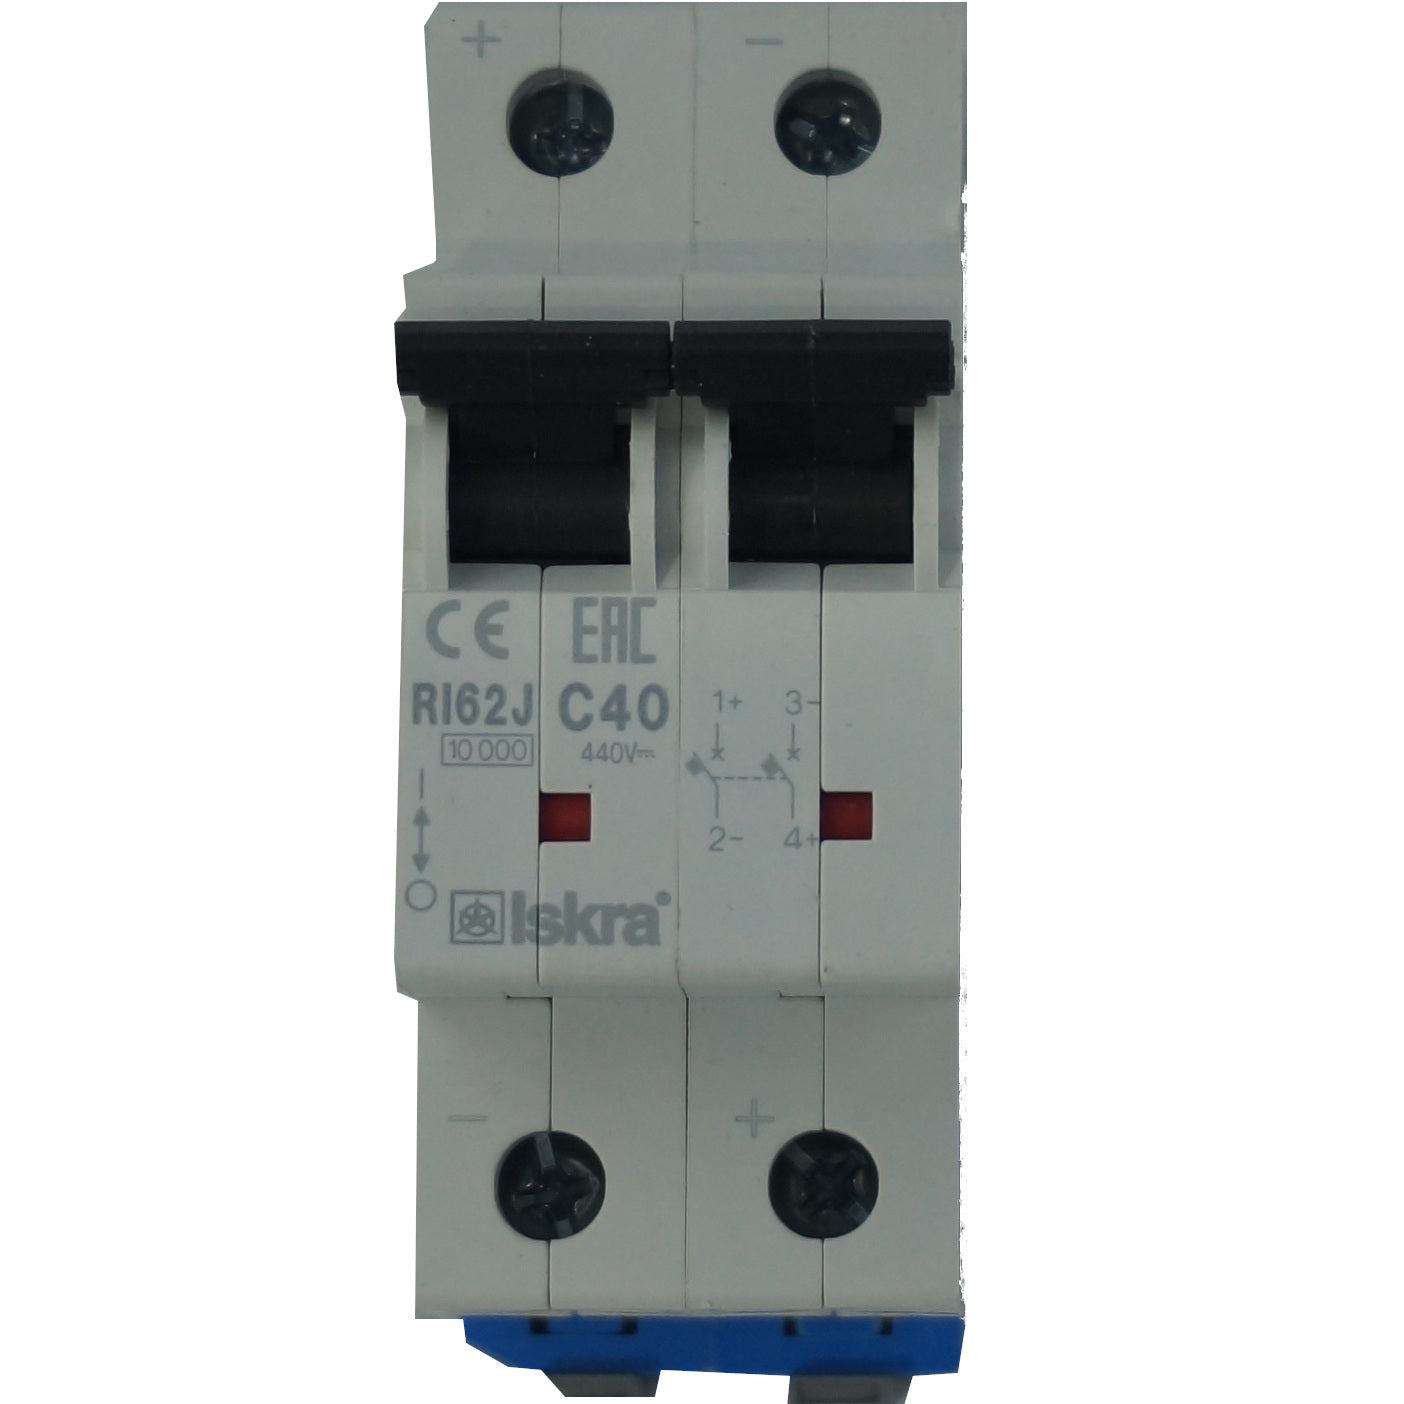 RI62J C 50-10kA, 2 Pole DC Miniature Circuit Breaker Disconnect Switch C Curve 50 Amp, 440VDC, 10kA